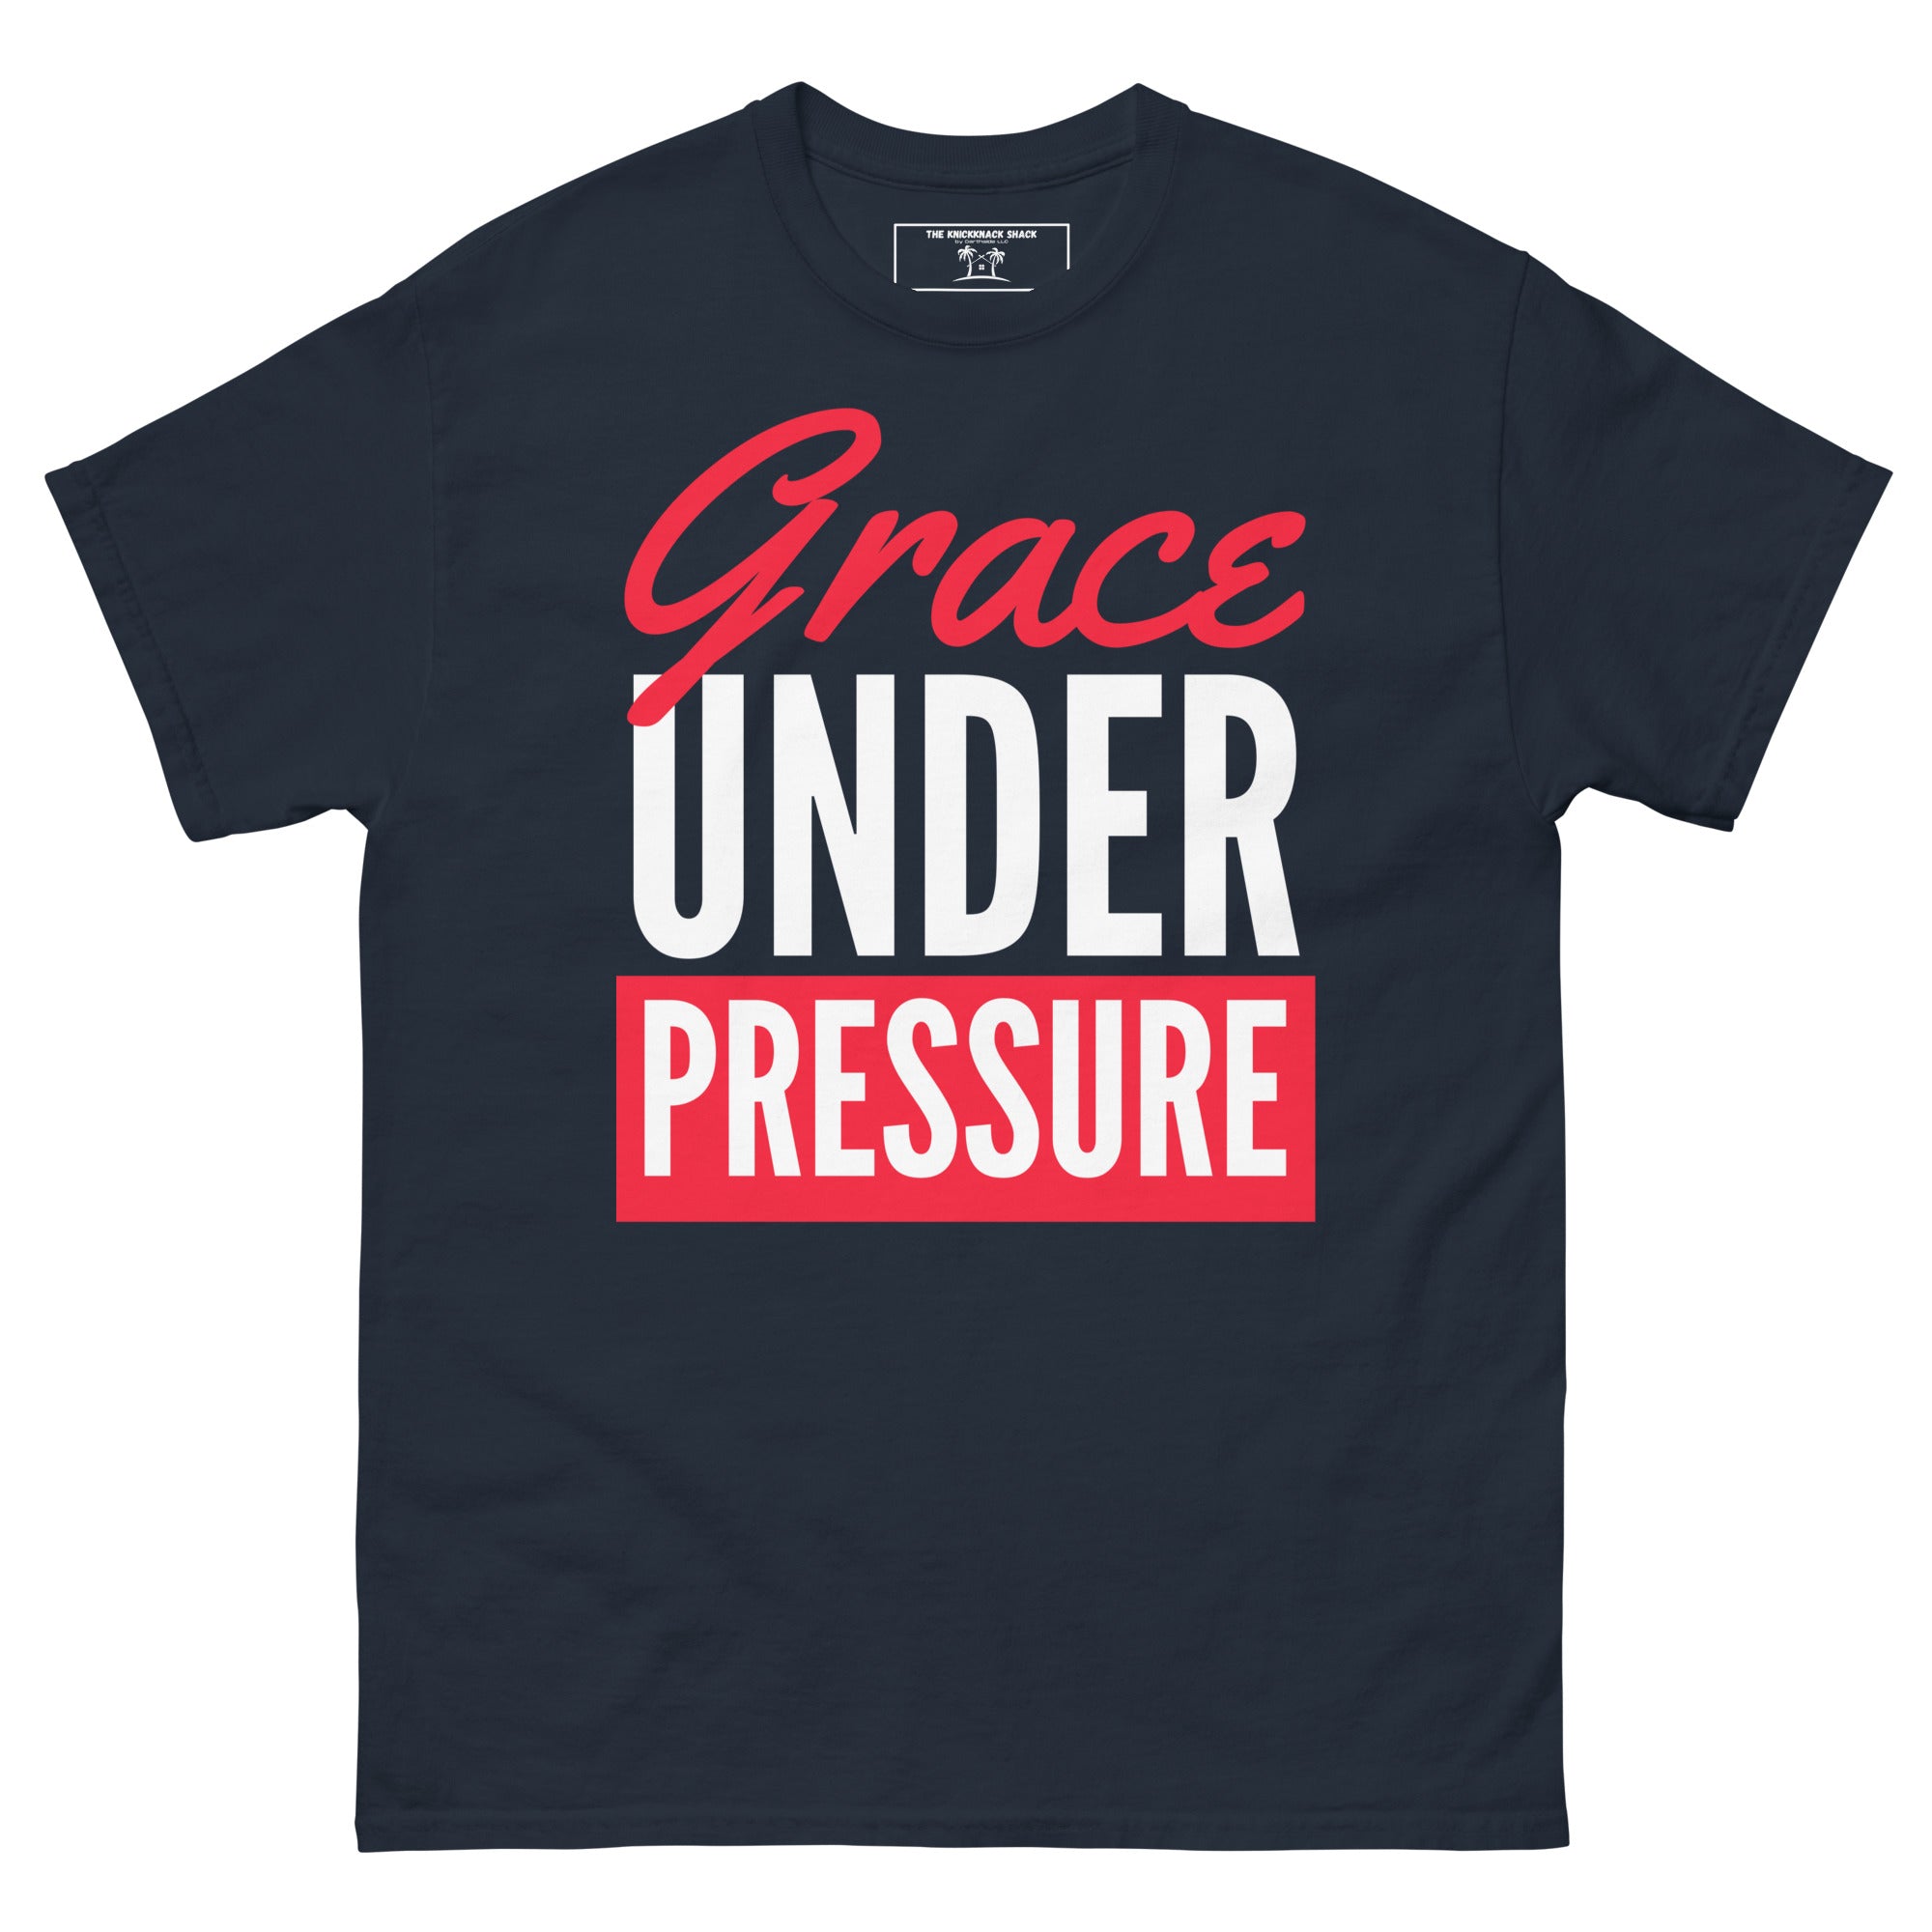 Classic Tee - Grace Under Pressure (Dark Colors)